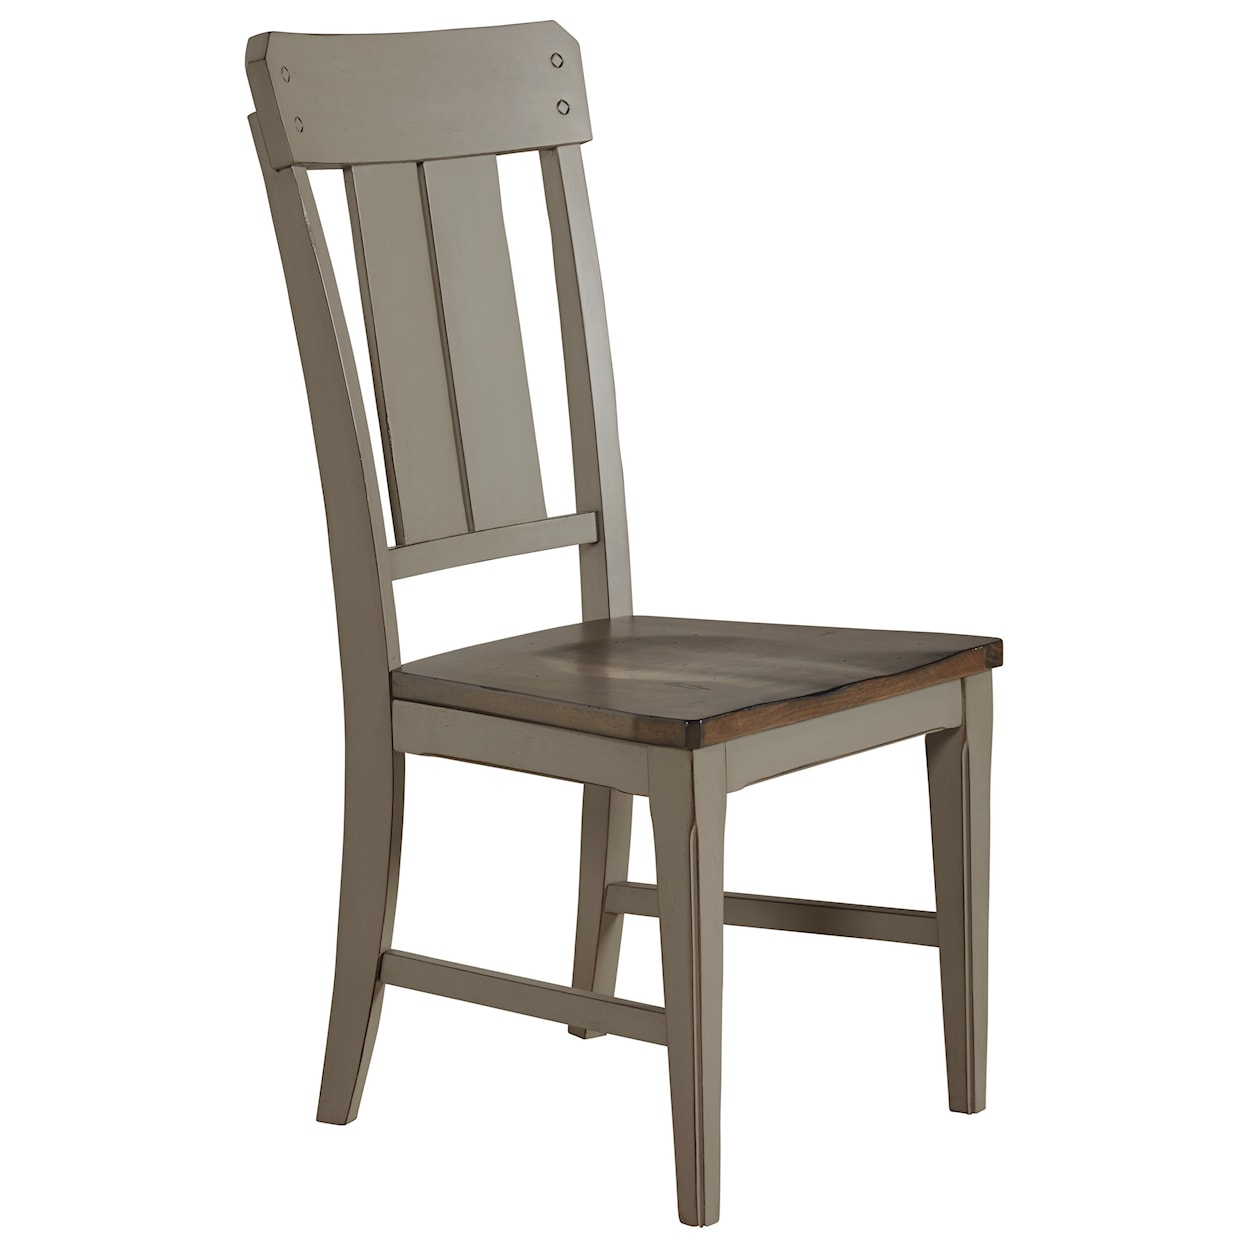 Avalon Furniture Shaker Nouveau Dining Chair